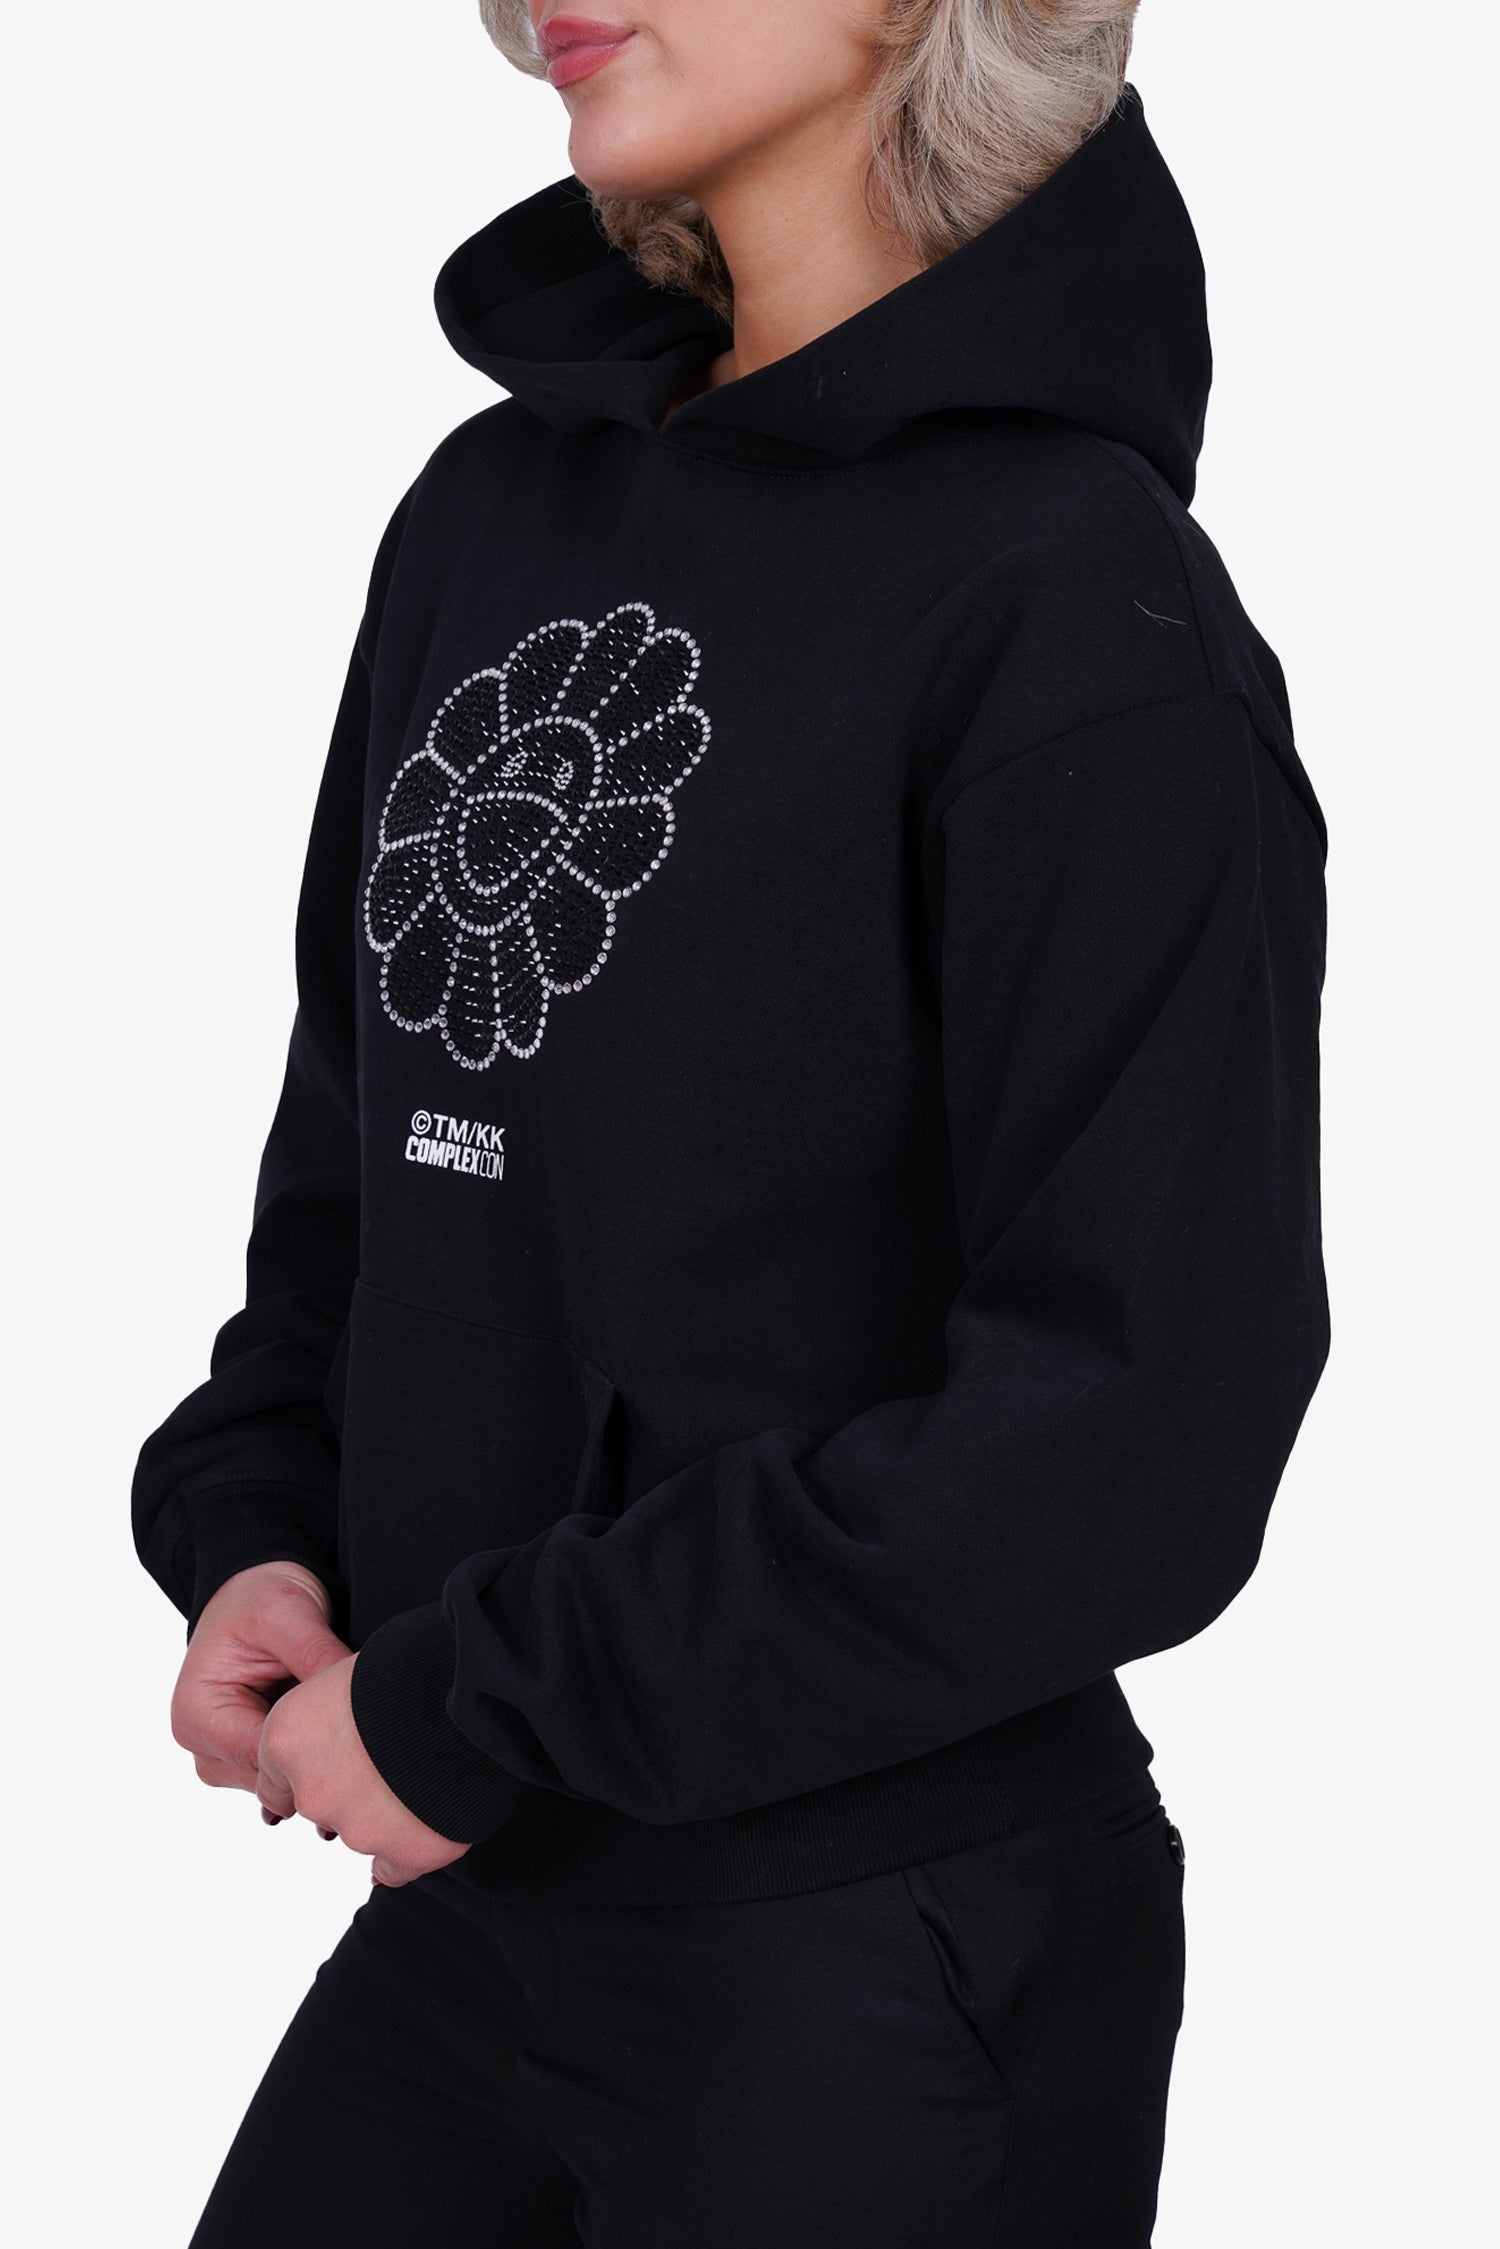 Takashi Murakami x ComplexCon 2019 Black Swarovski Crystal Flower Hoodie  Size S